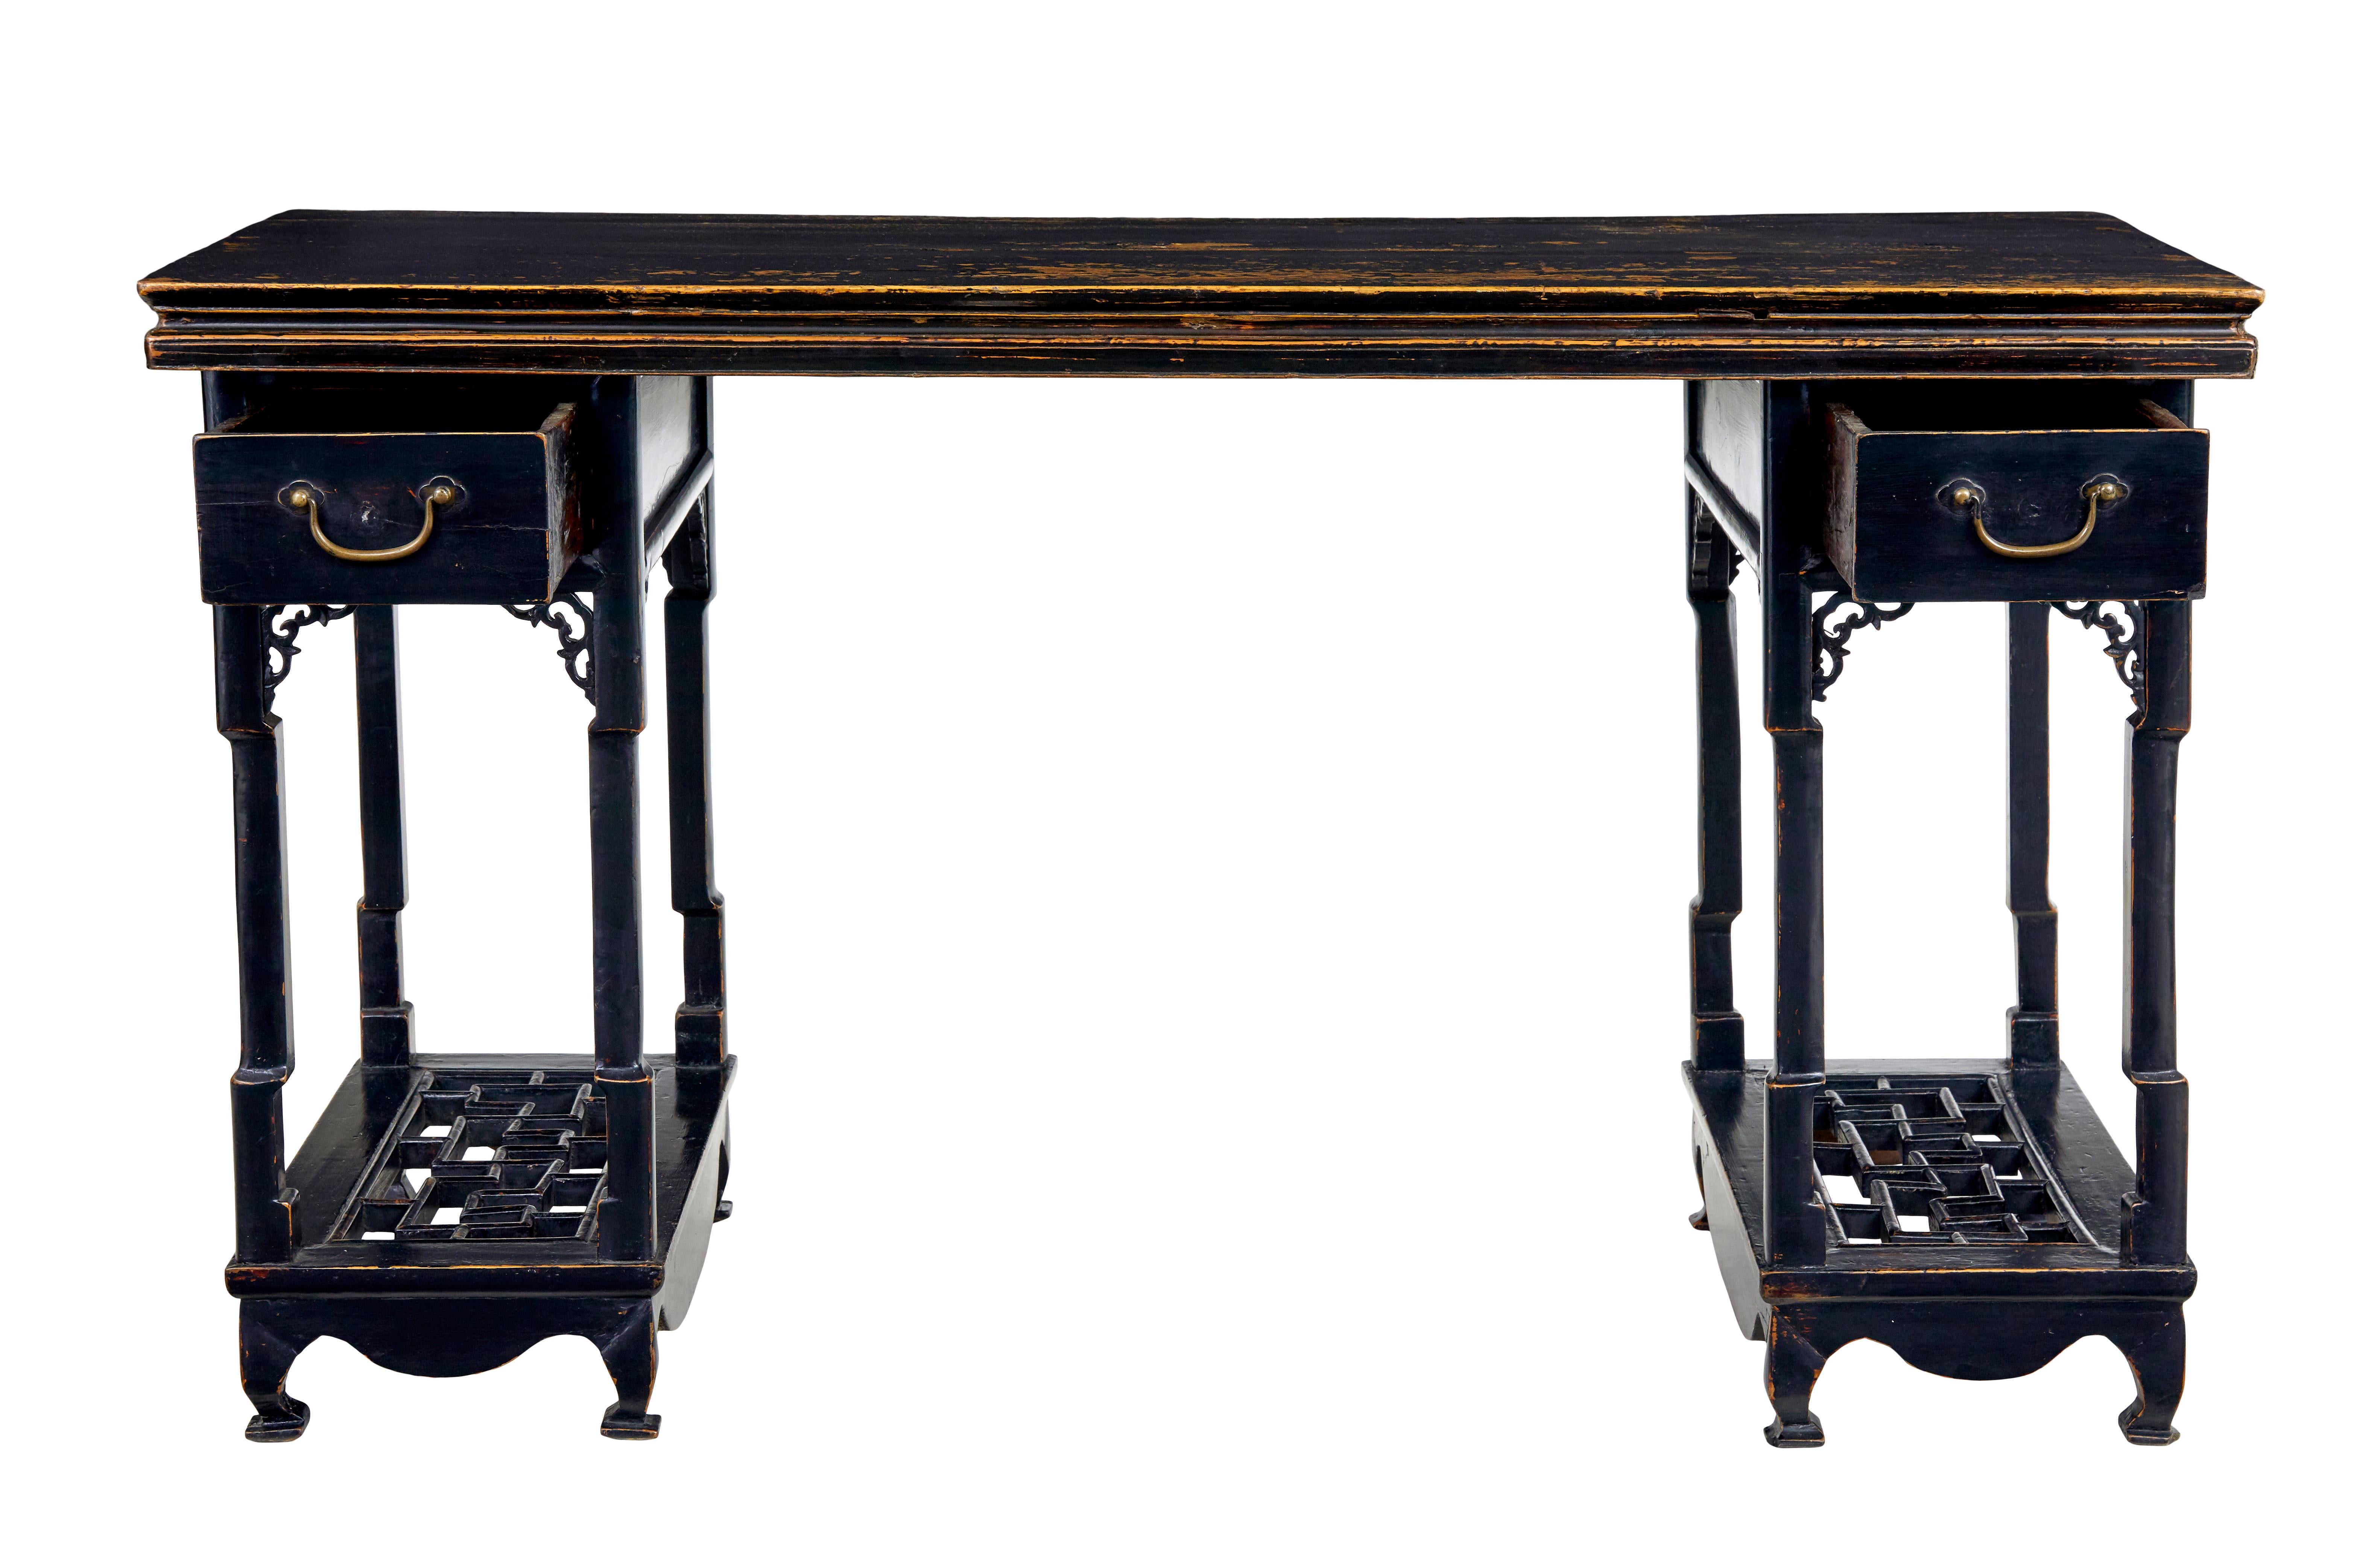 Hardwood 19th century Chinese black lacquered desk